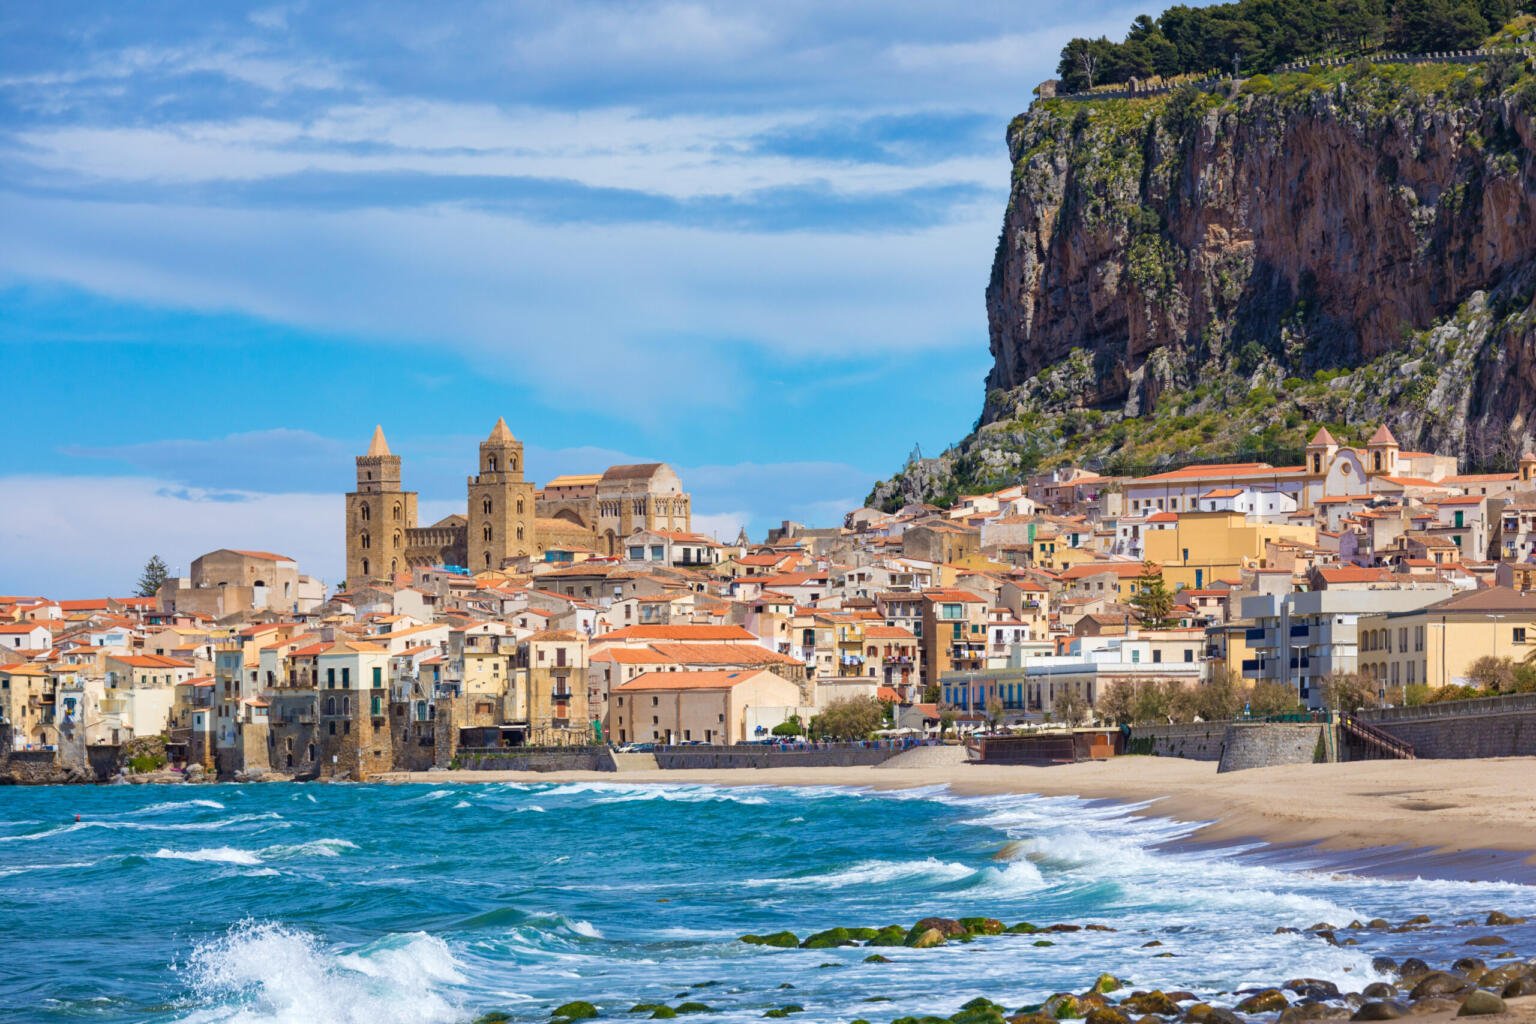 The coastal settlements in Sicily.